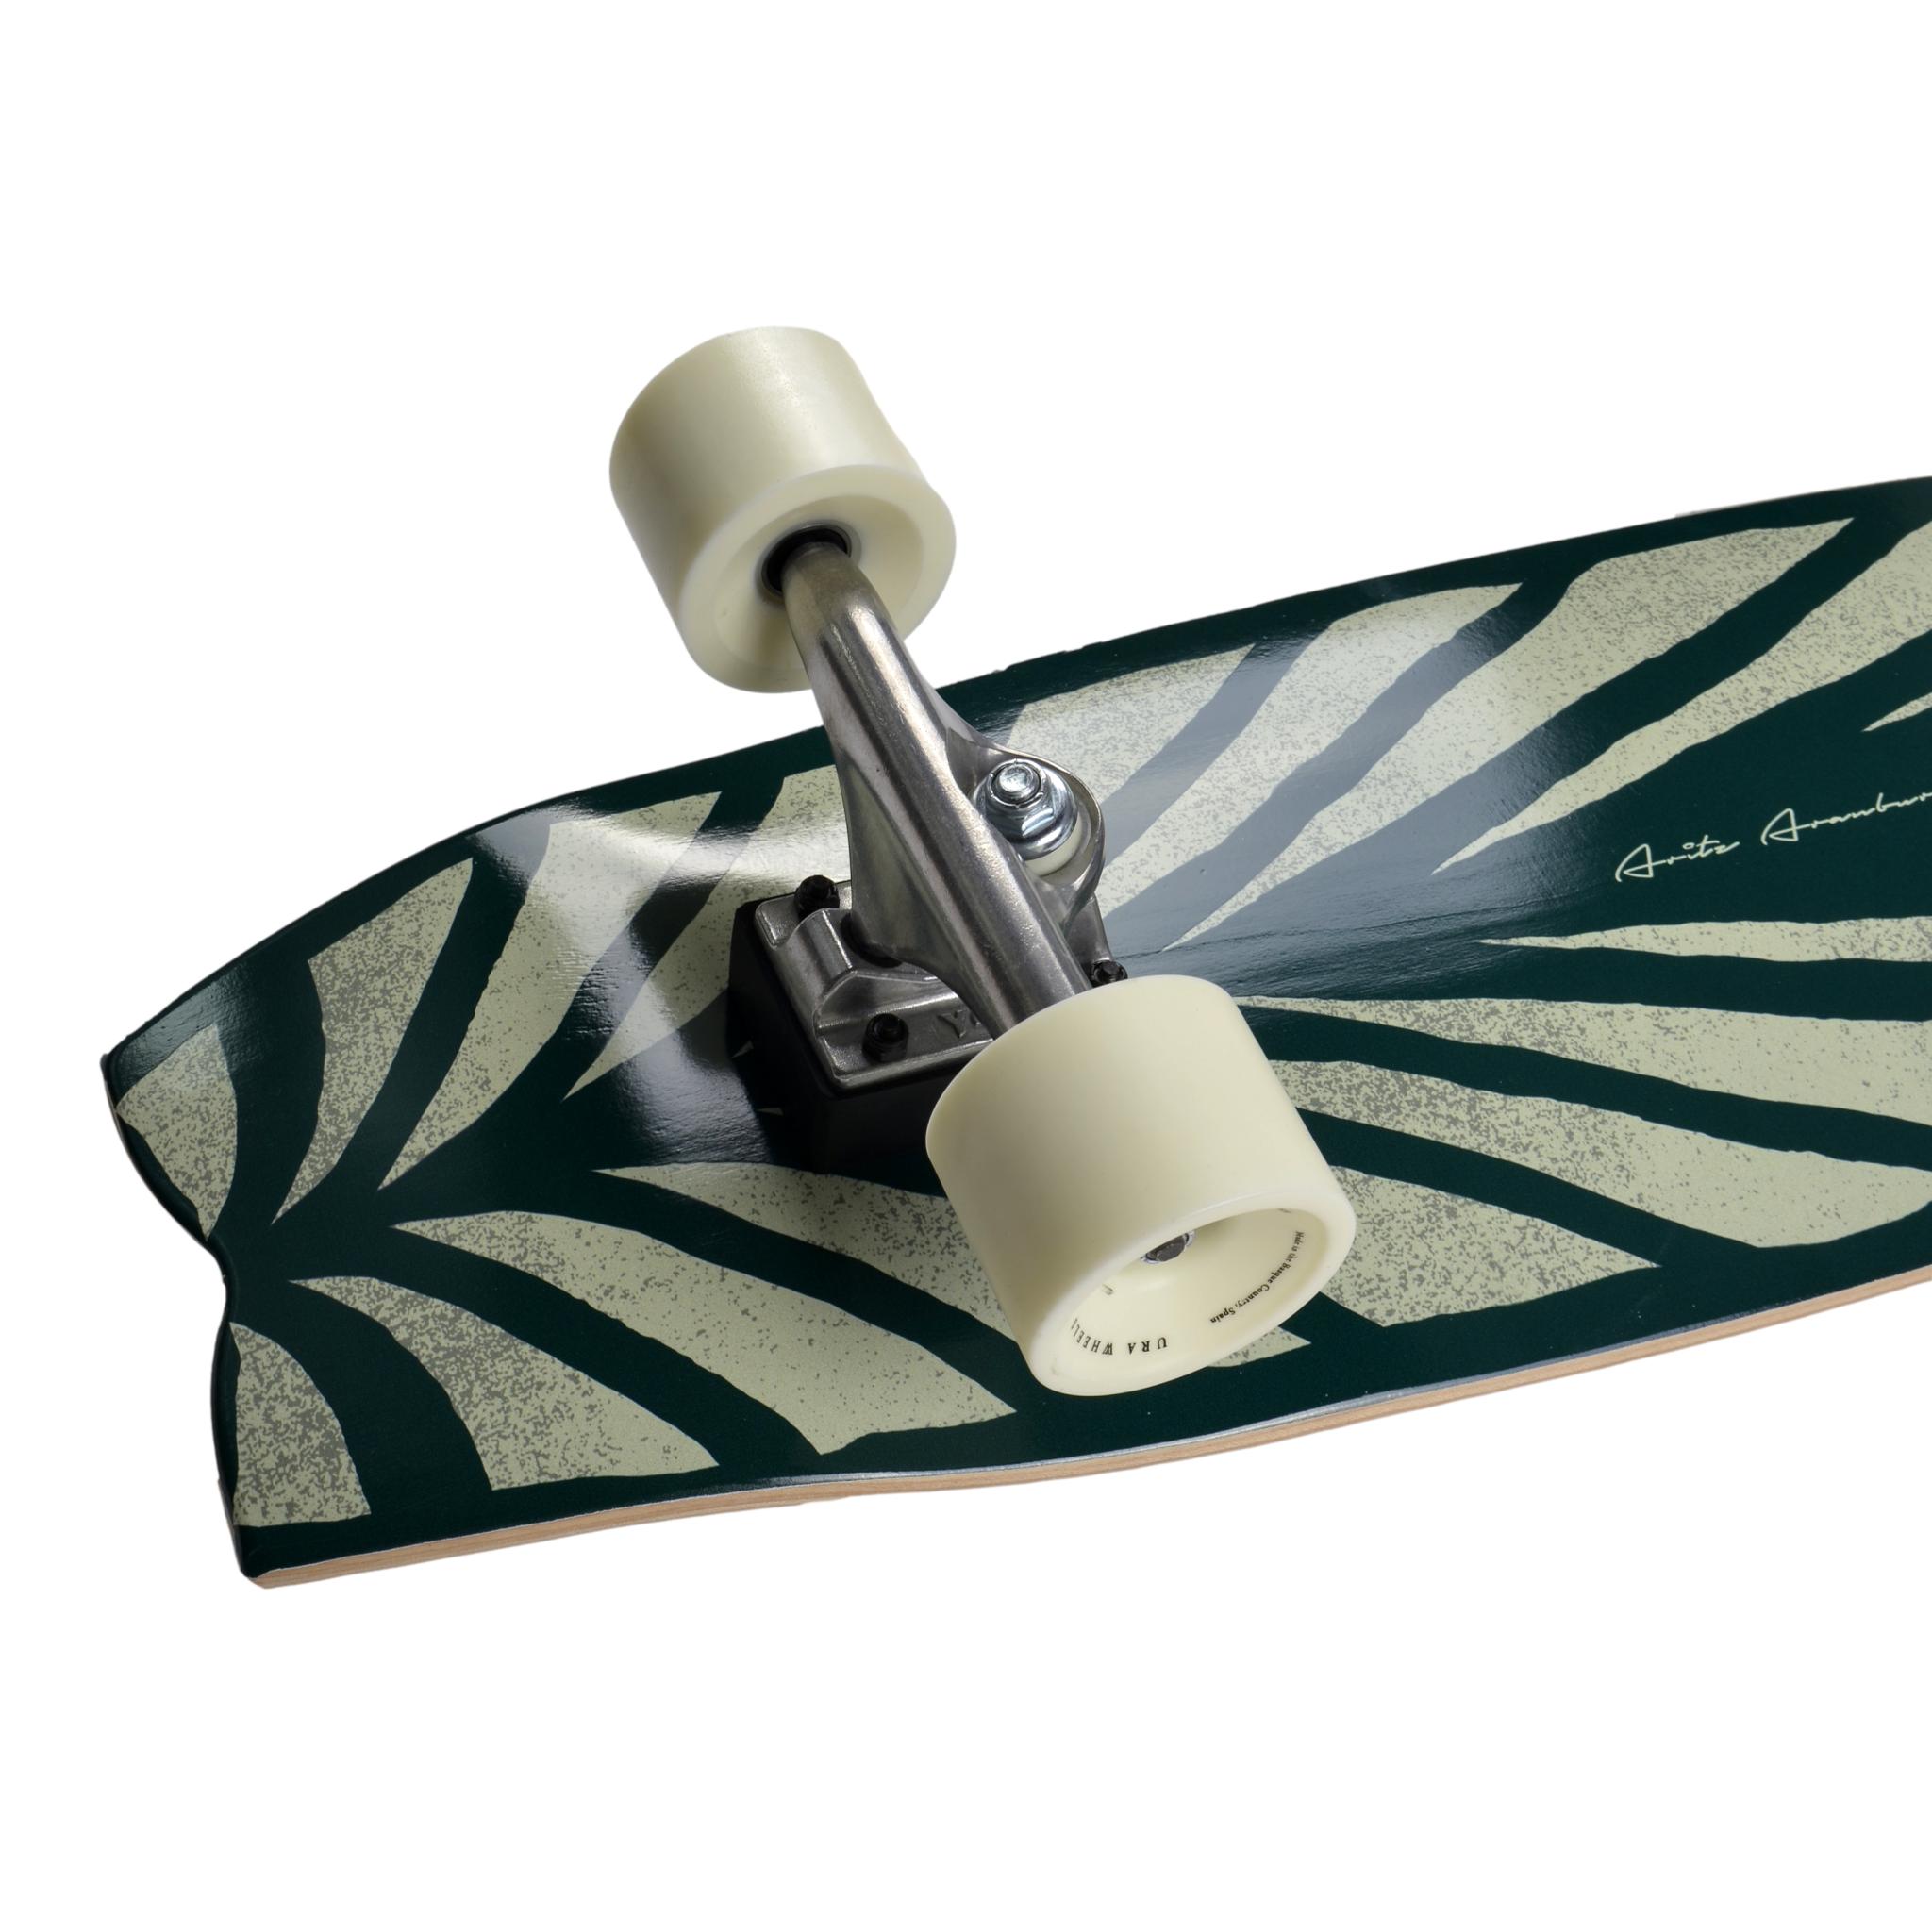 Yow Surf Skate Aritz Aranburu Signature 32.5